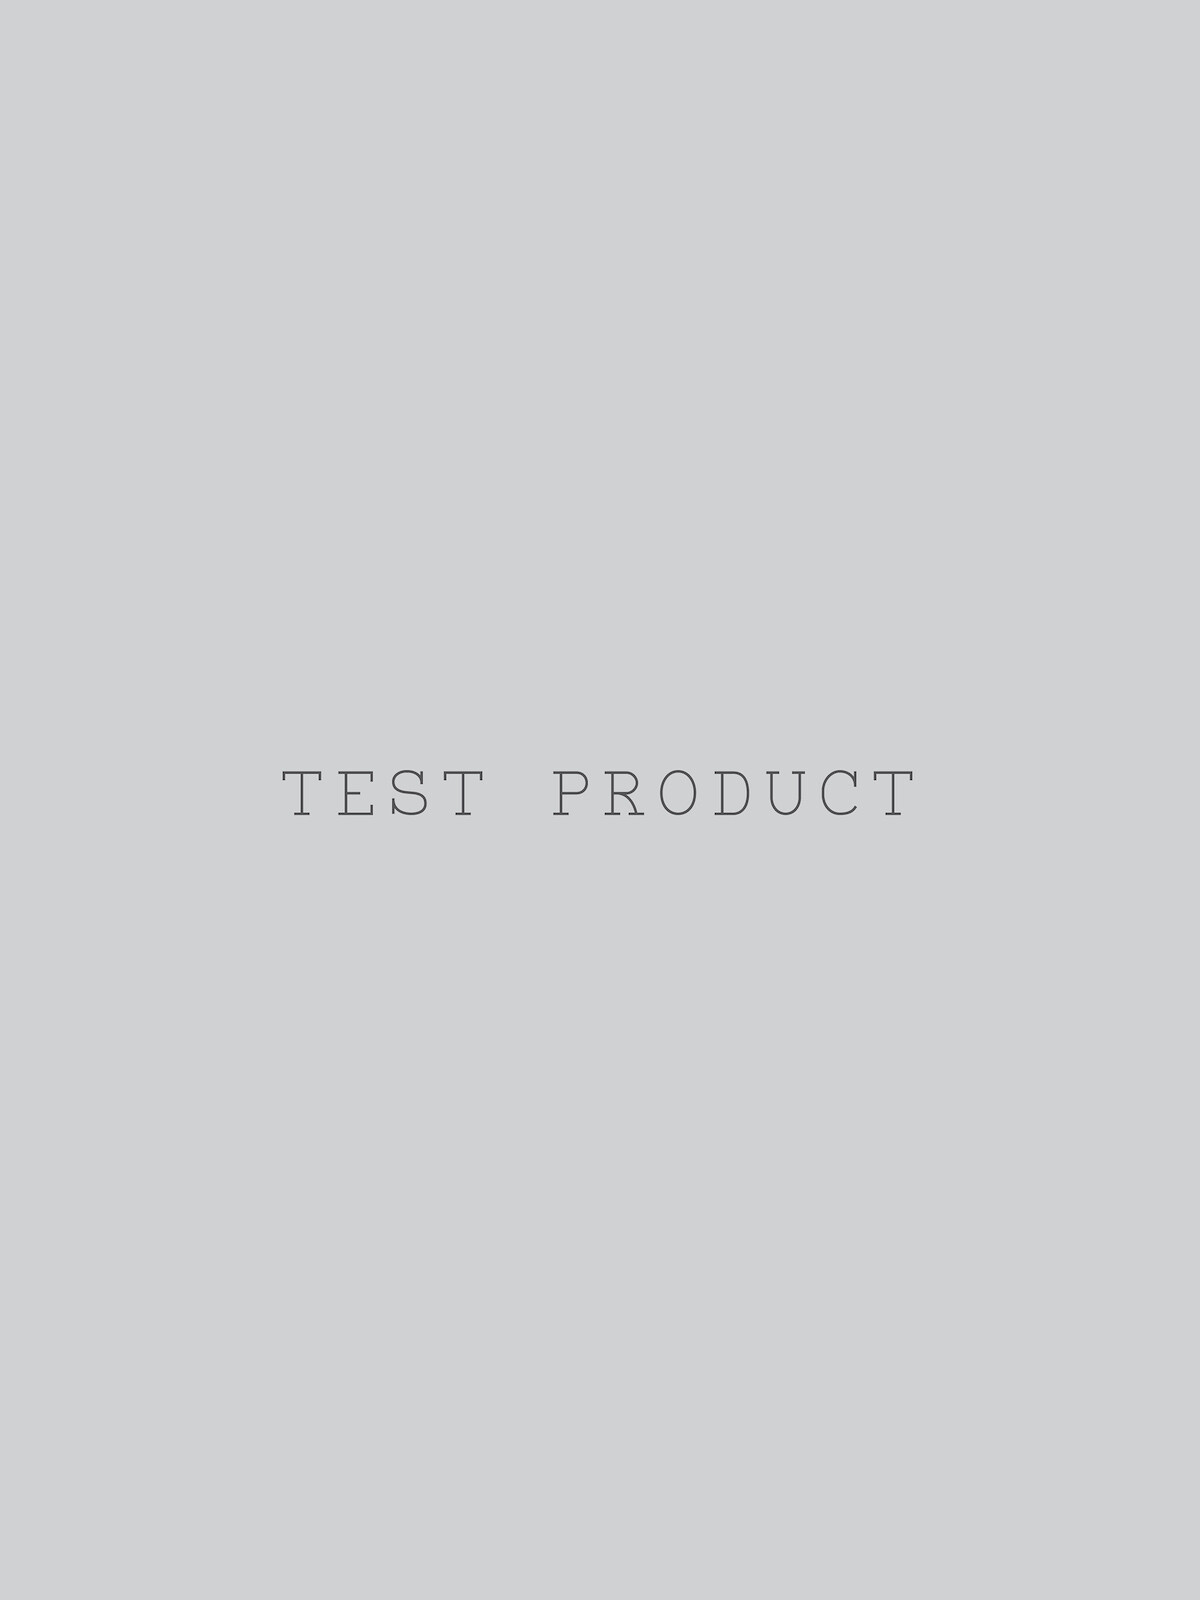 Test product Image